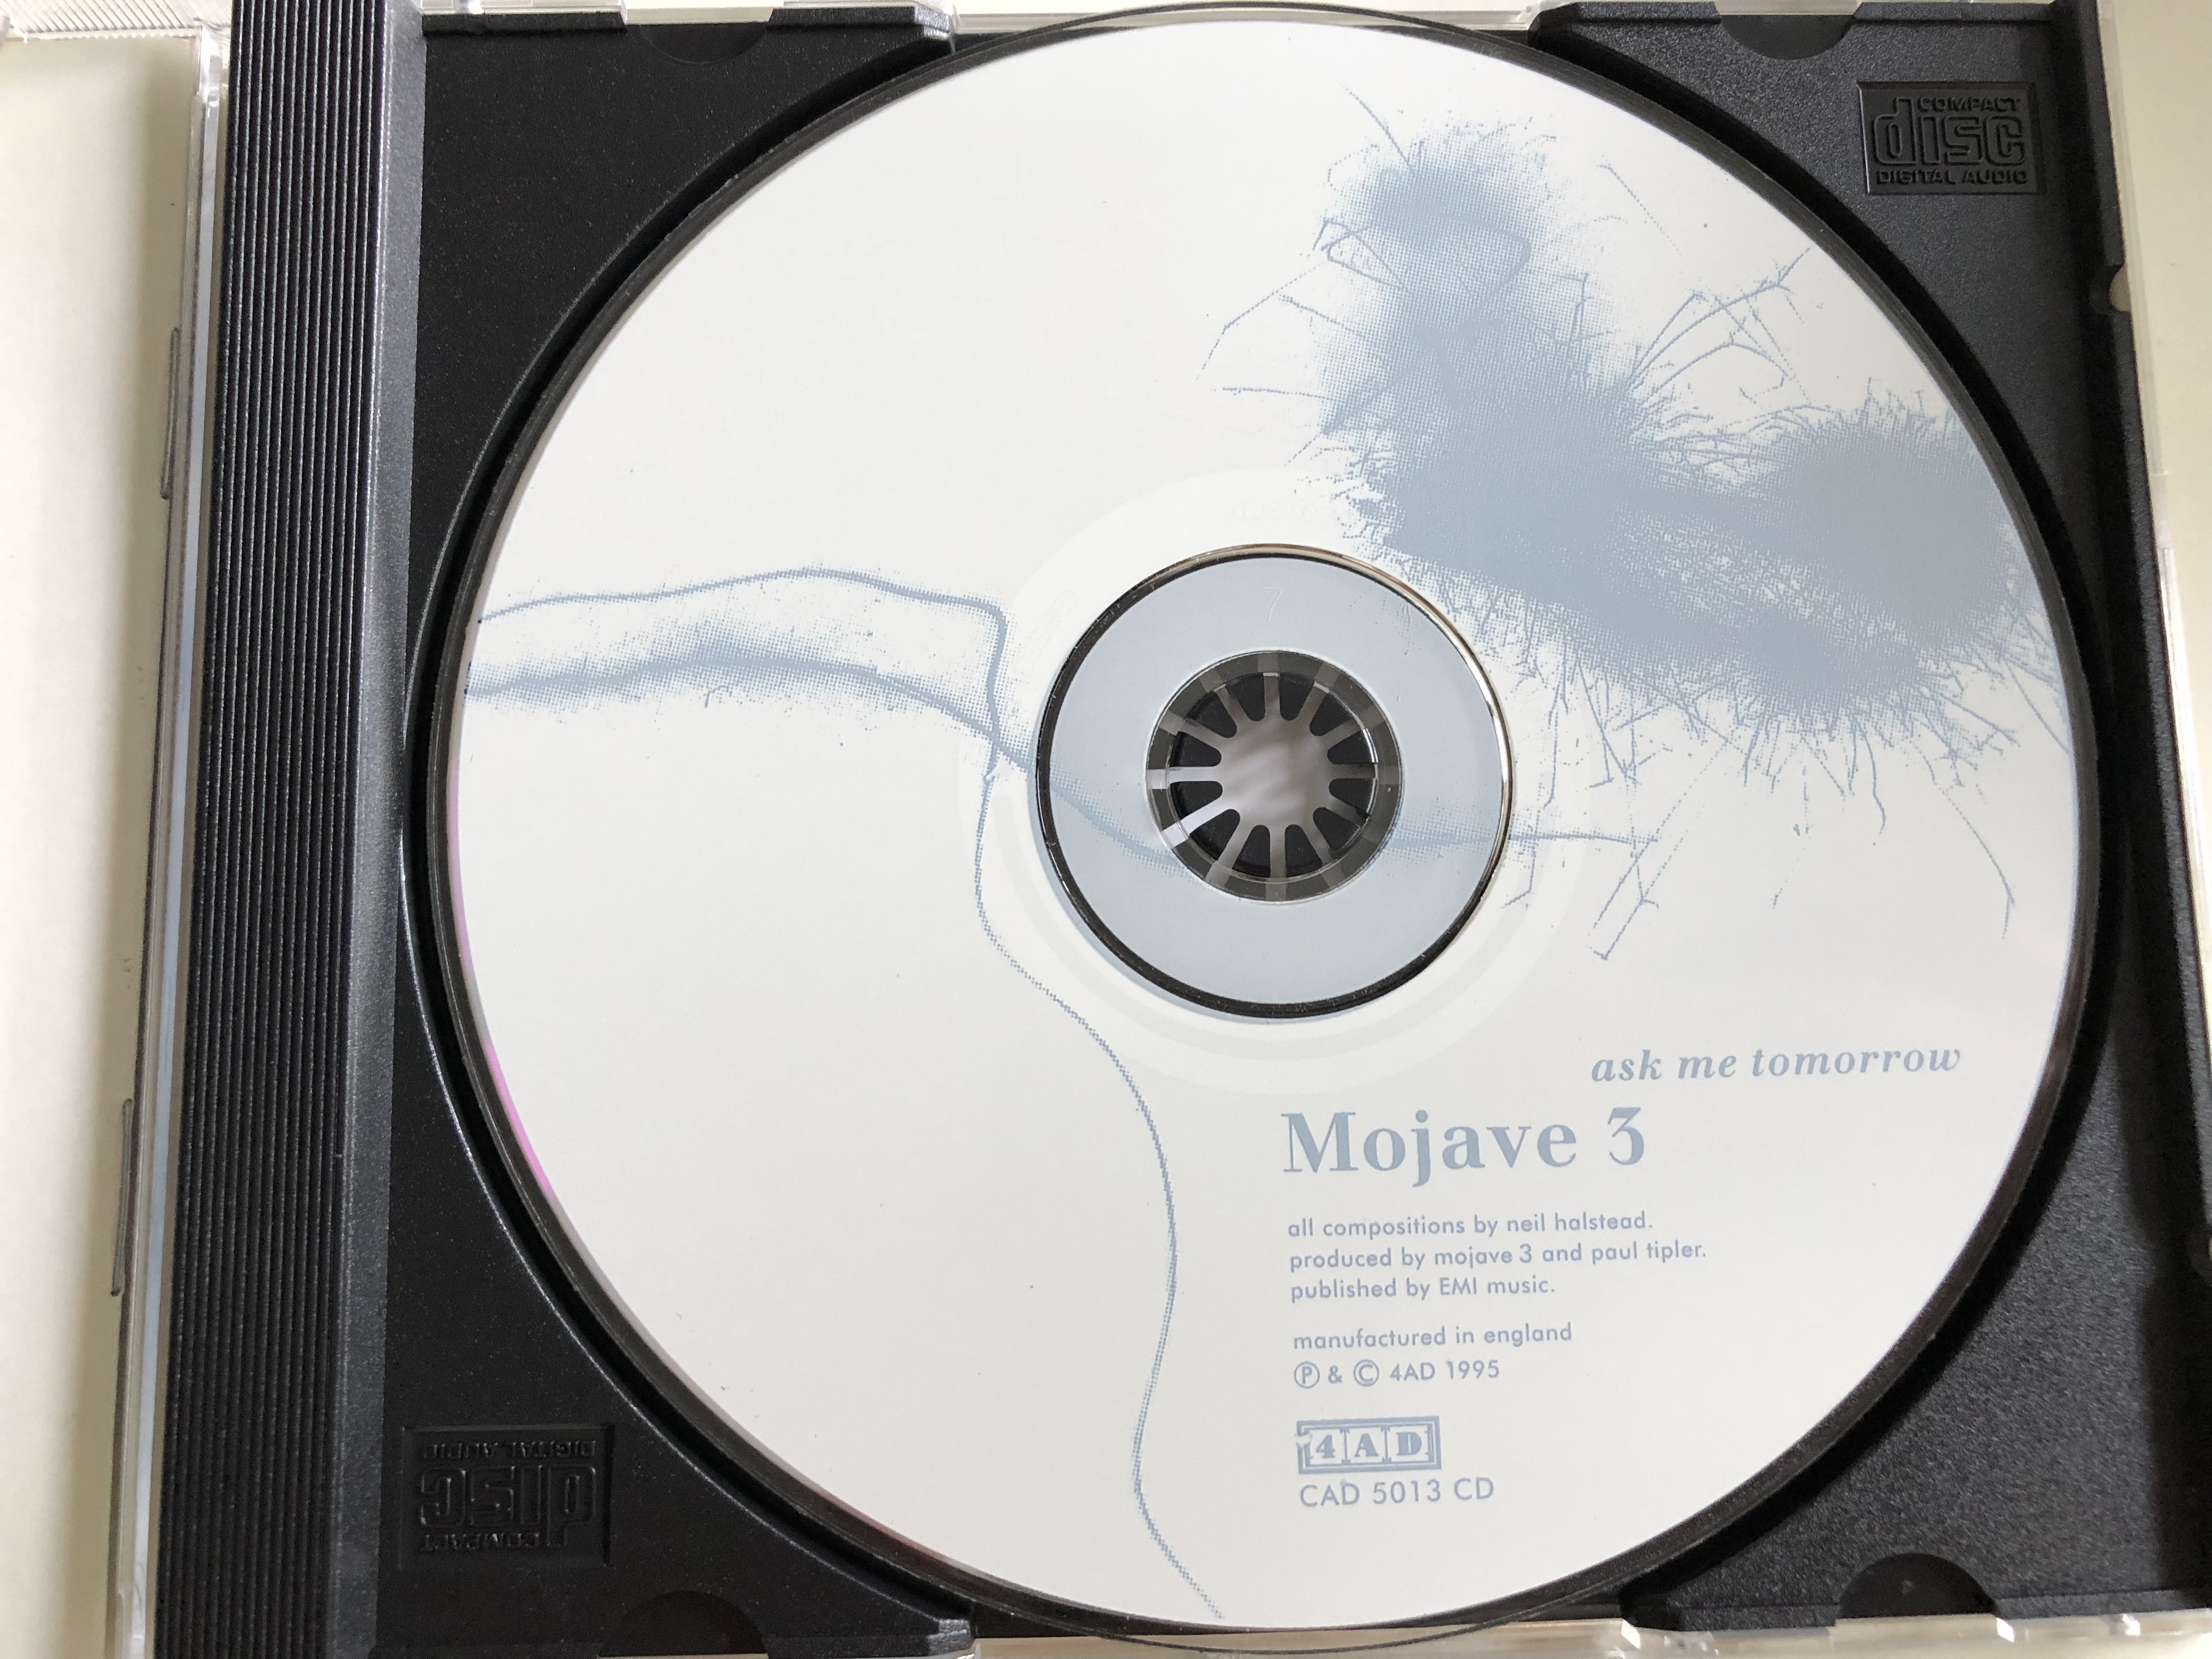 mojave-3-ask-me-tomorrow-audio-cd-1995-cad-5013-6-.jpg